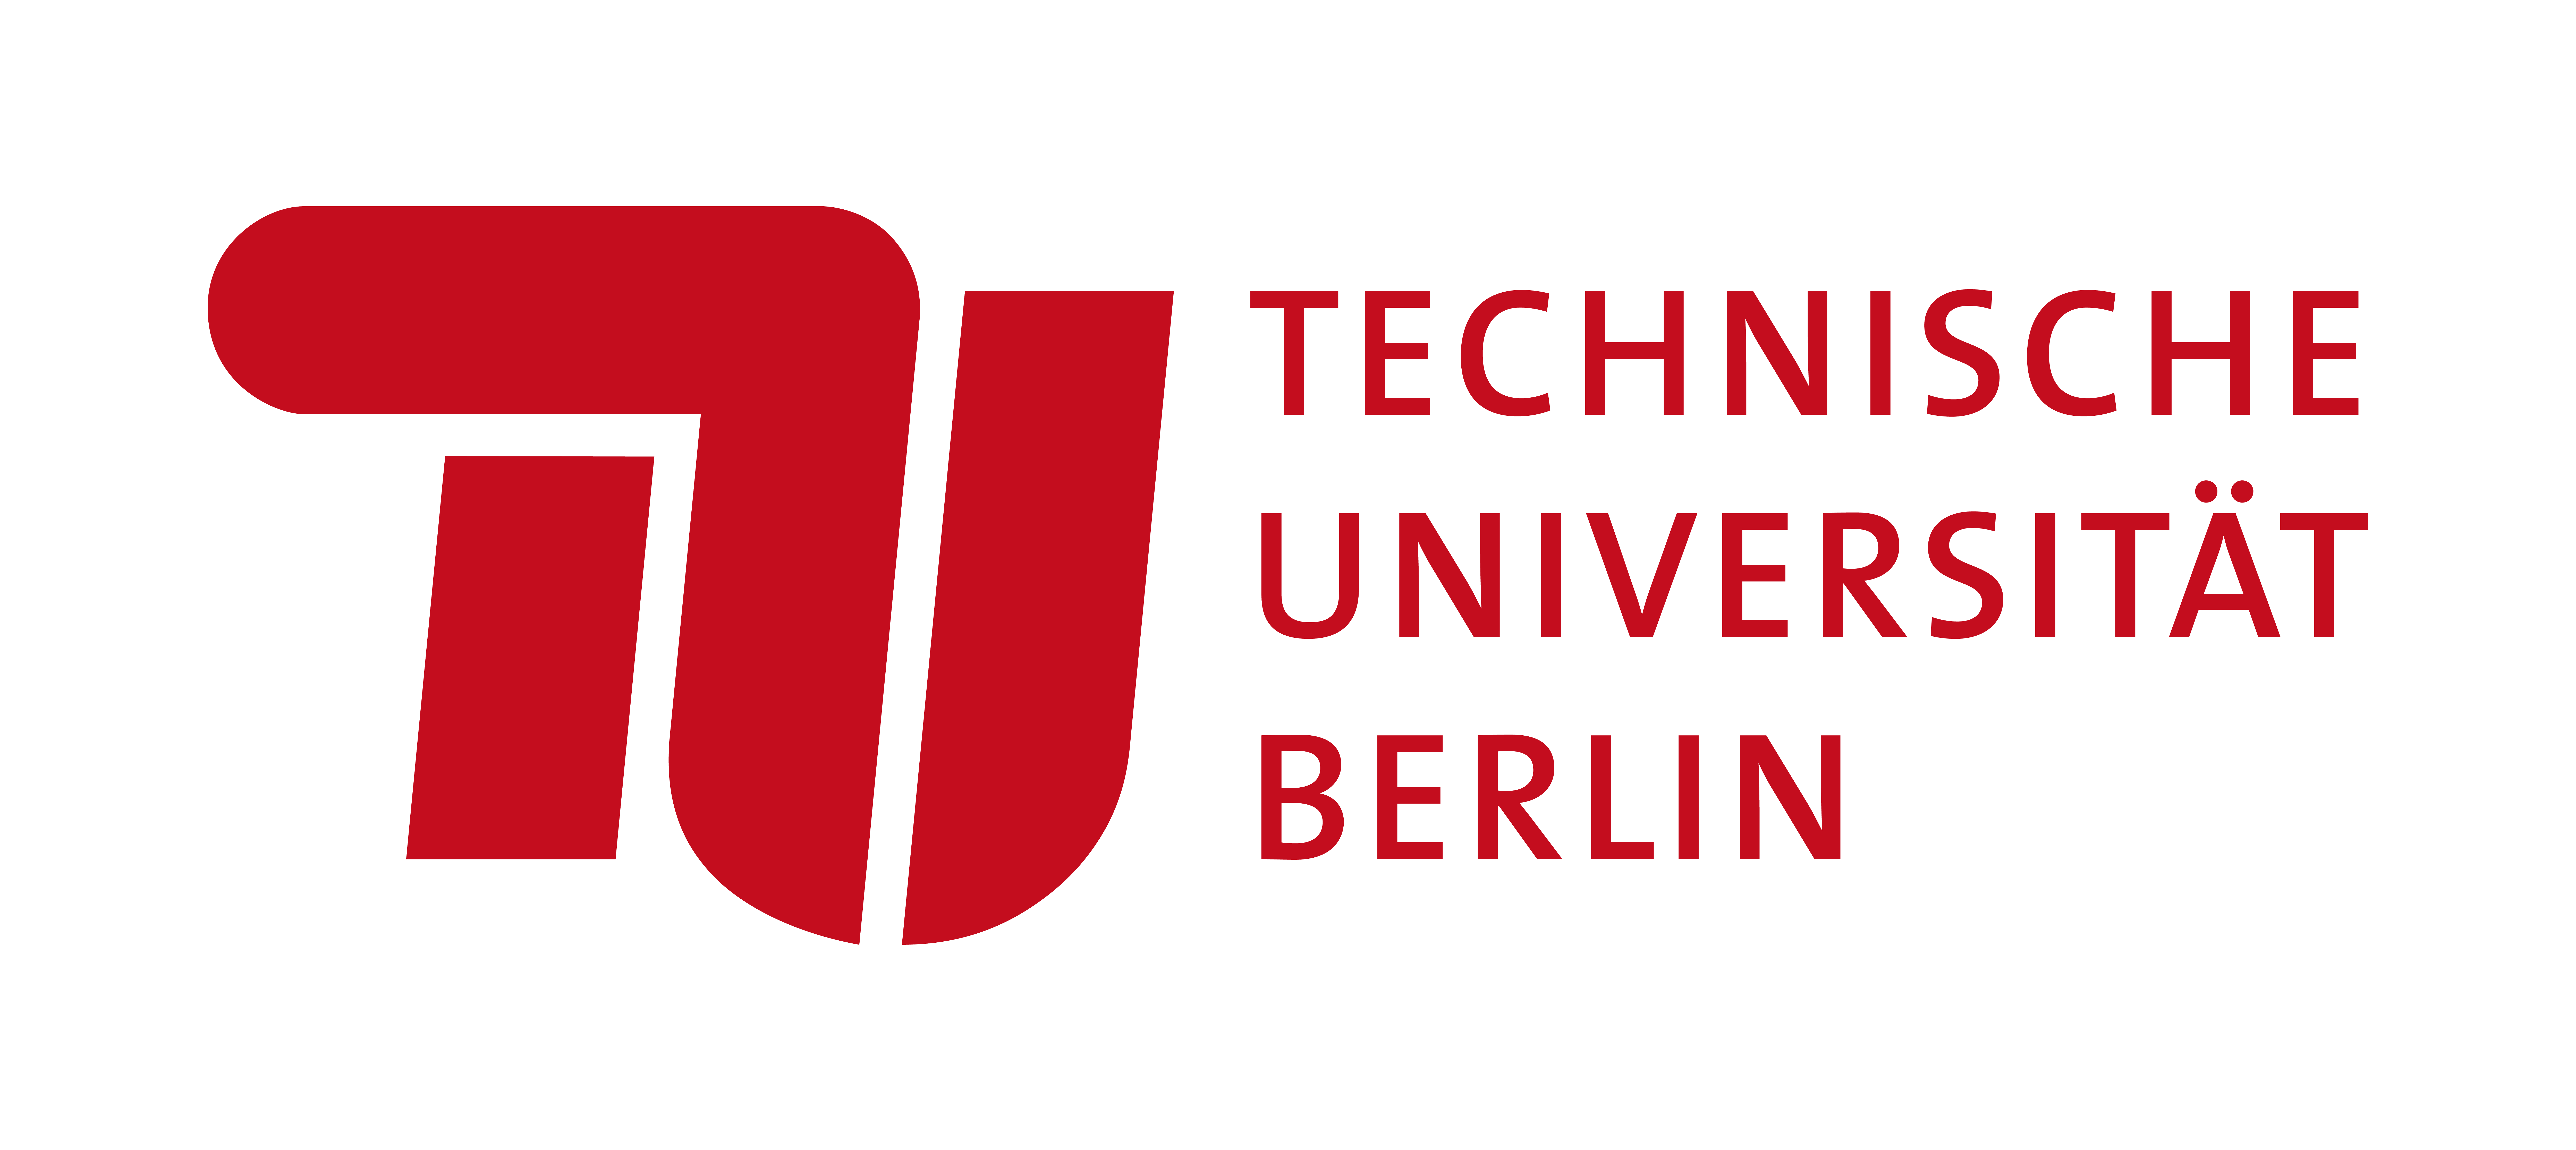 Technische UNIVERSITÄT Berlin